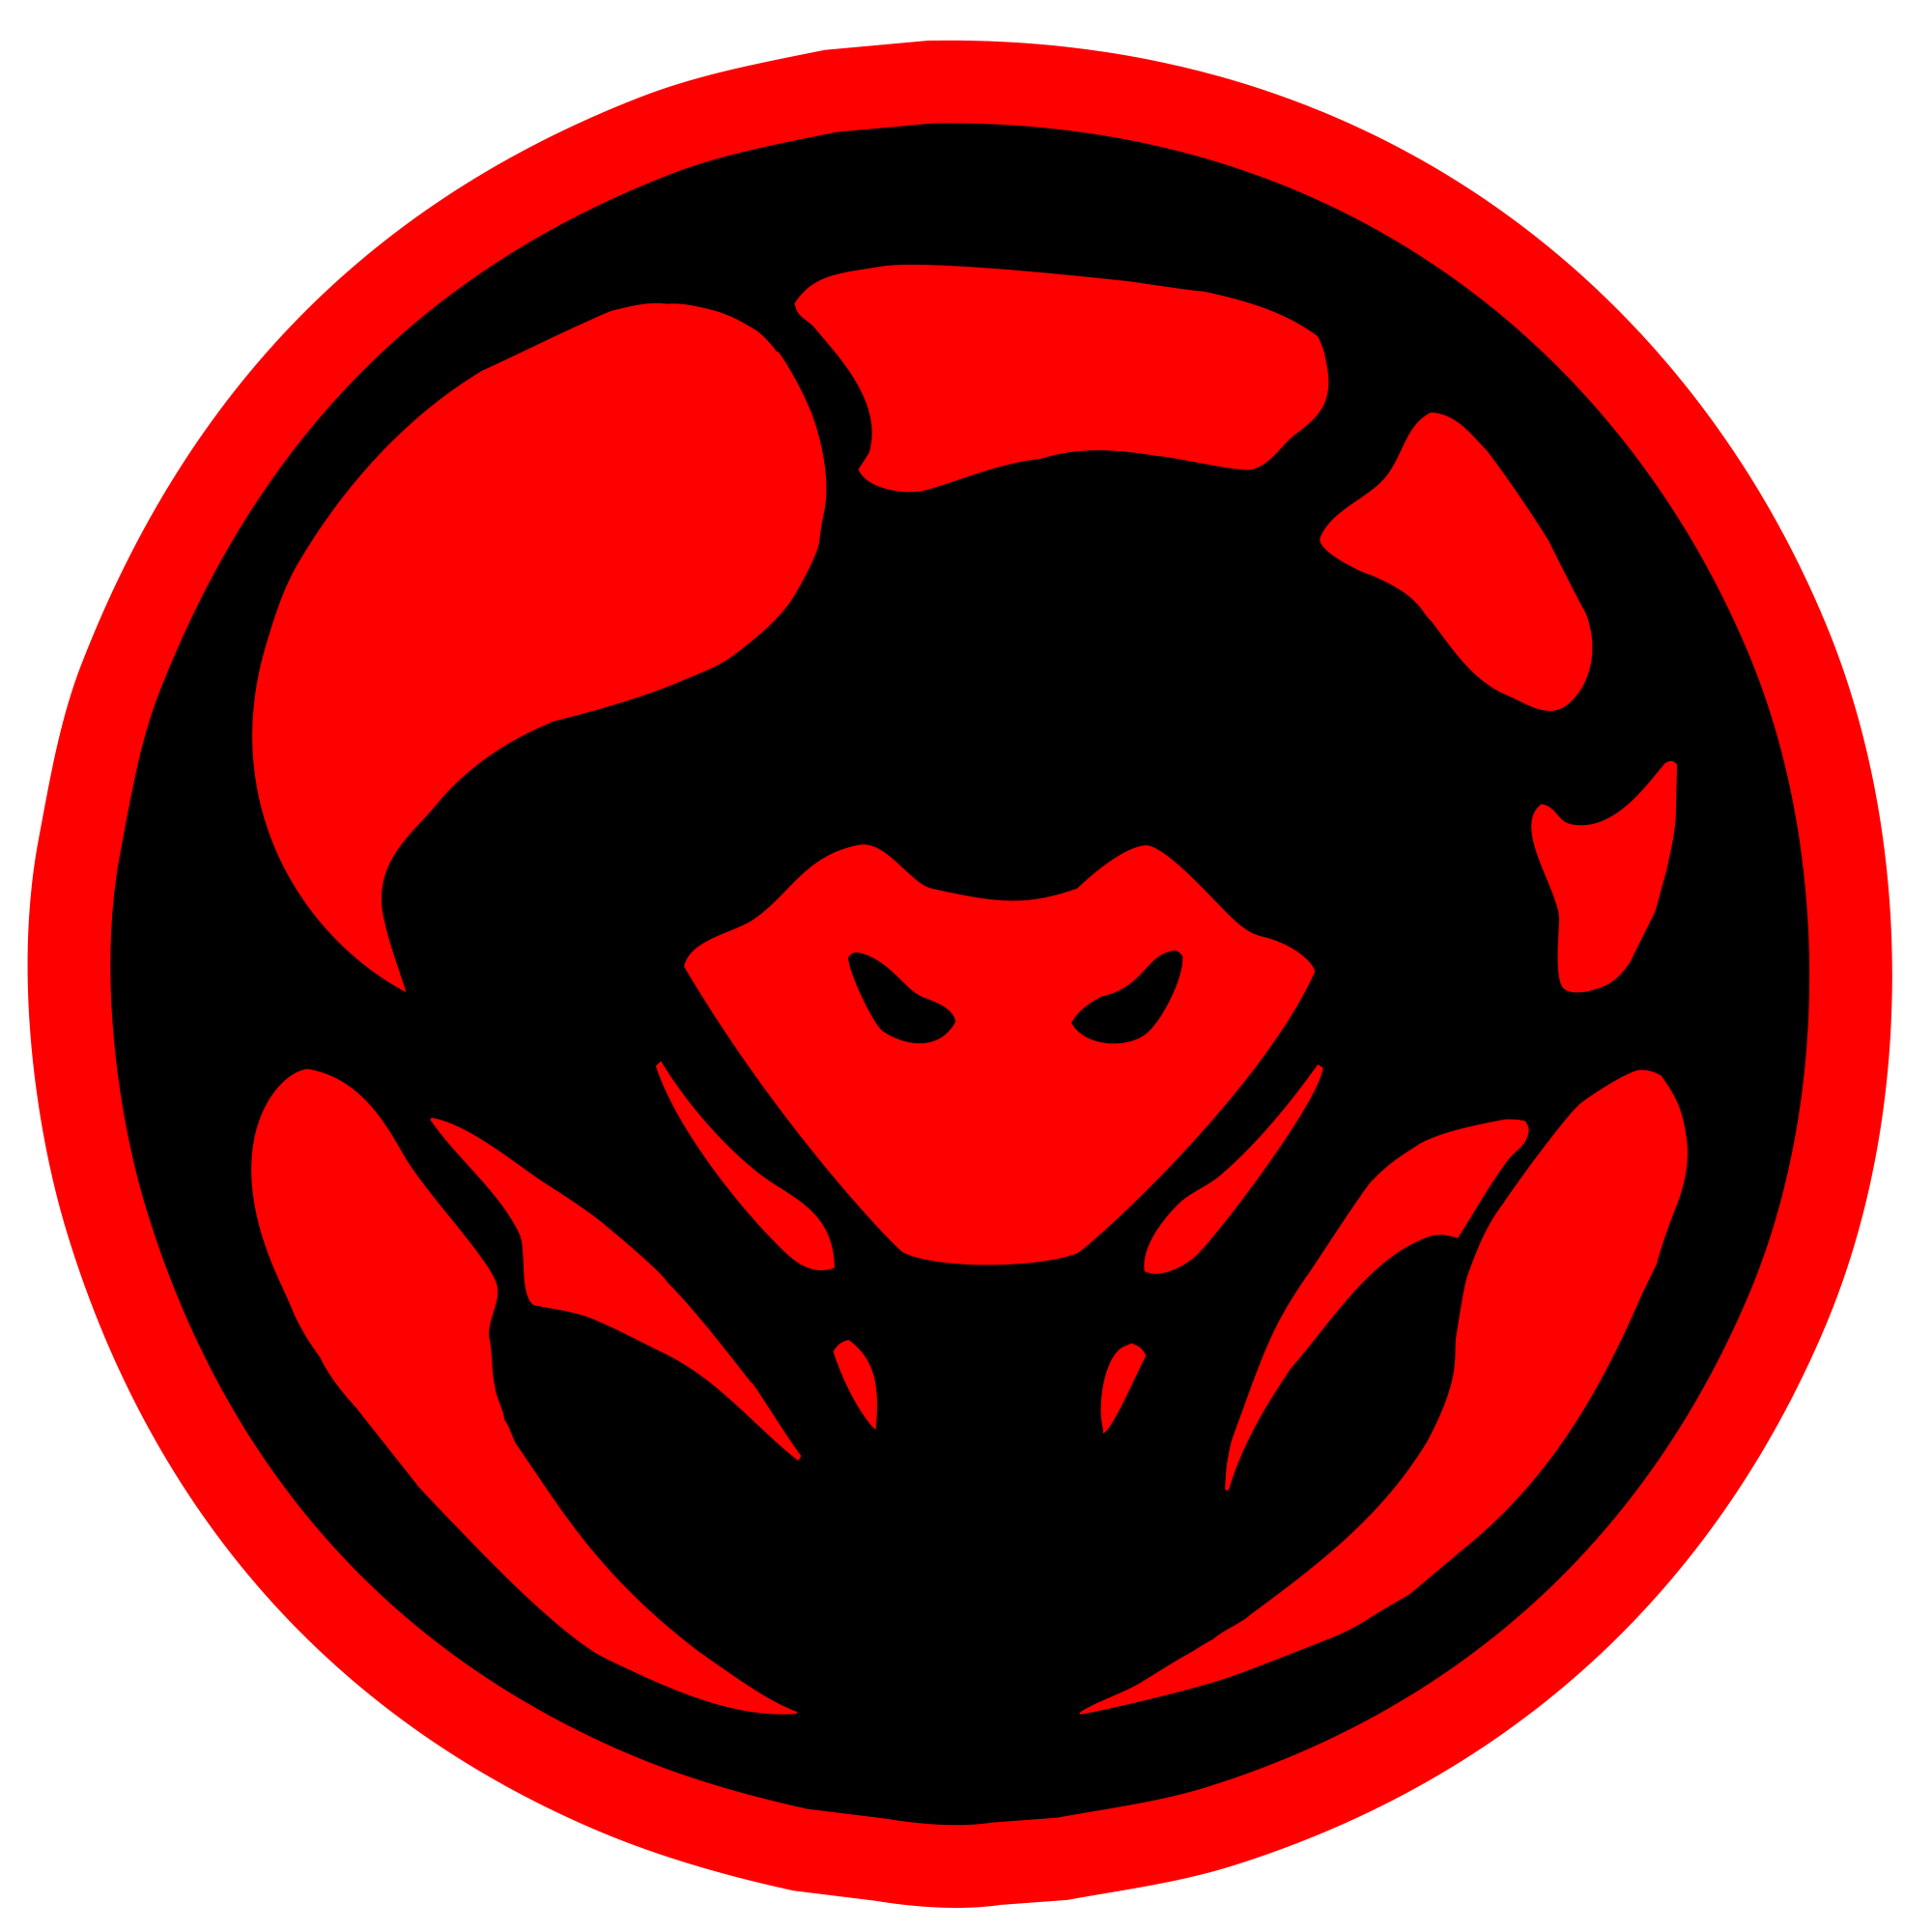 White with Red Circle Scorpion Logo - Red White Circle Logo With Scorpion